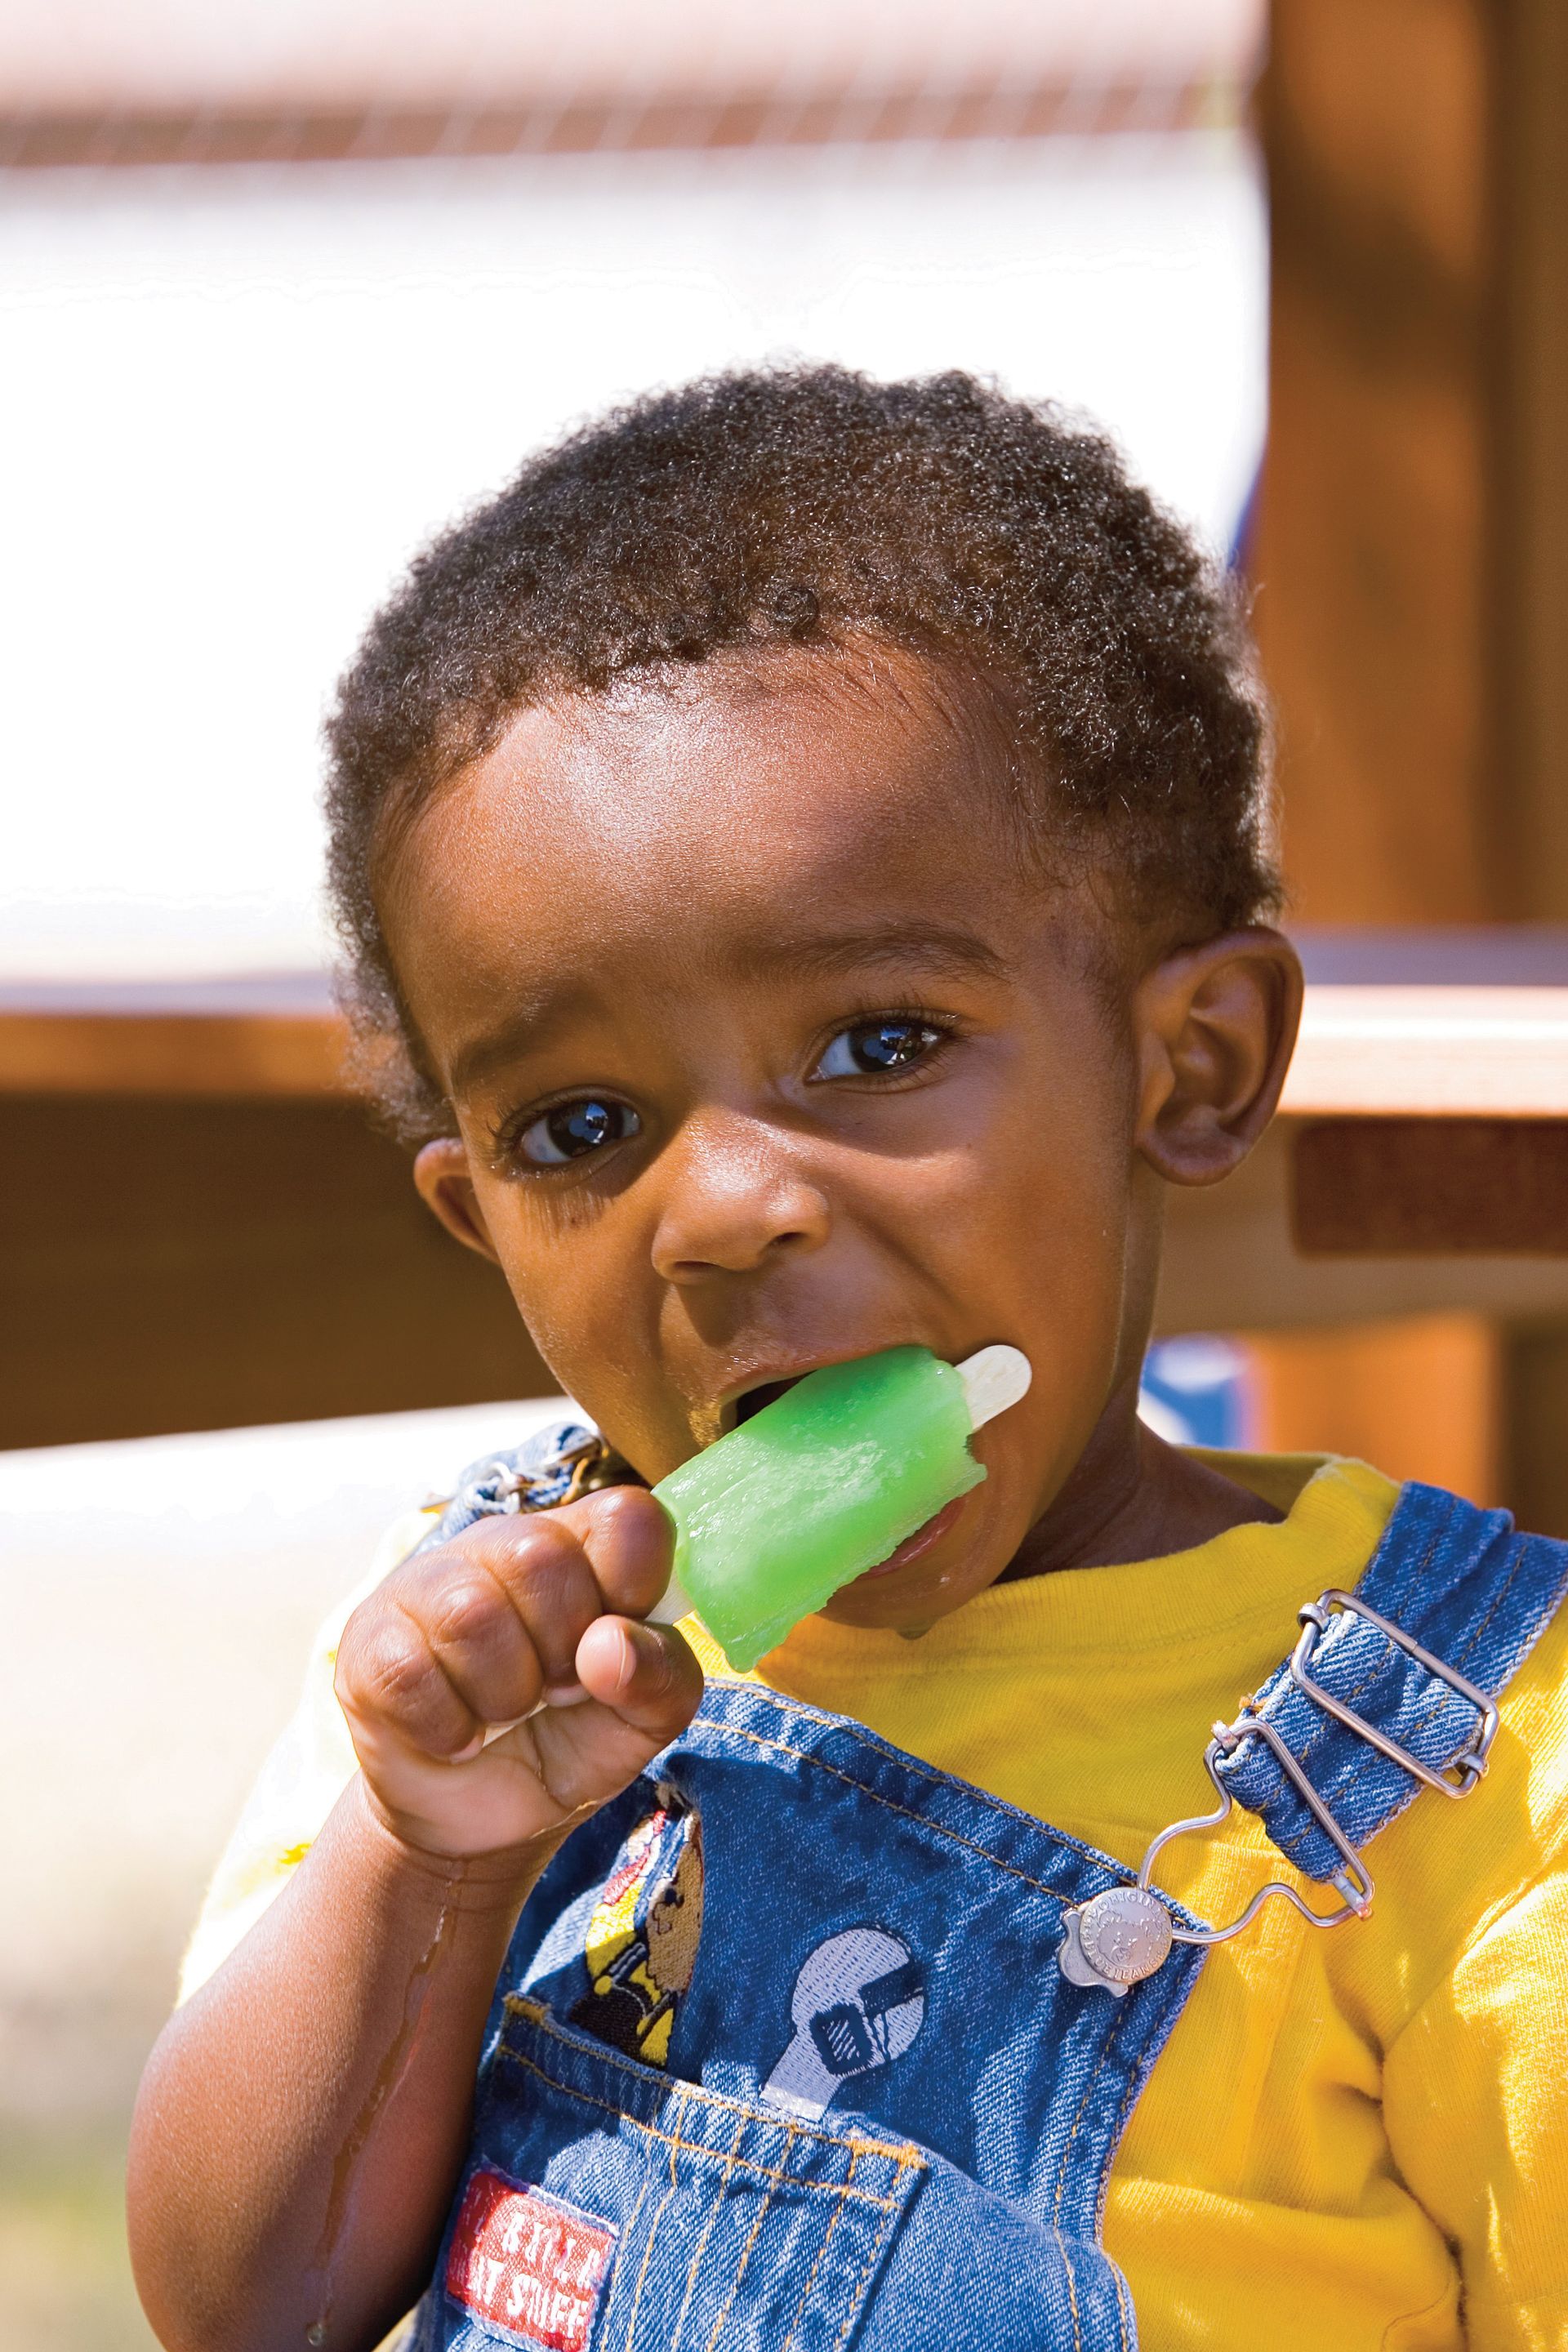 A little boy eats a green Popsicle.